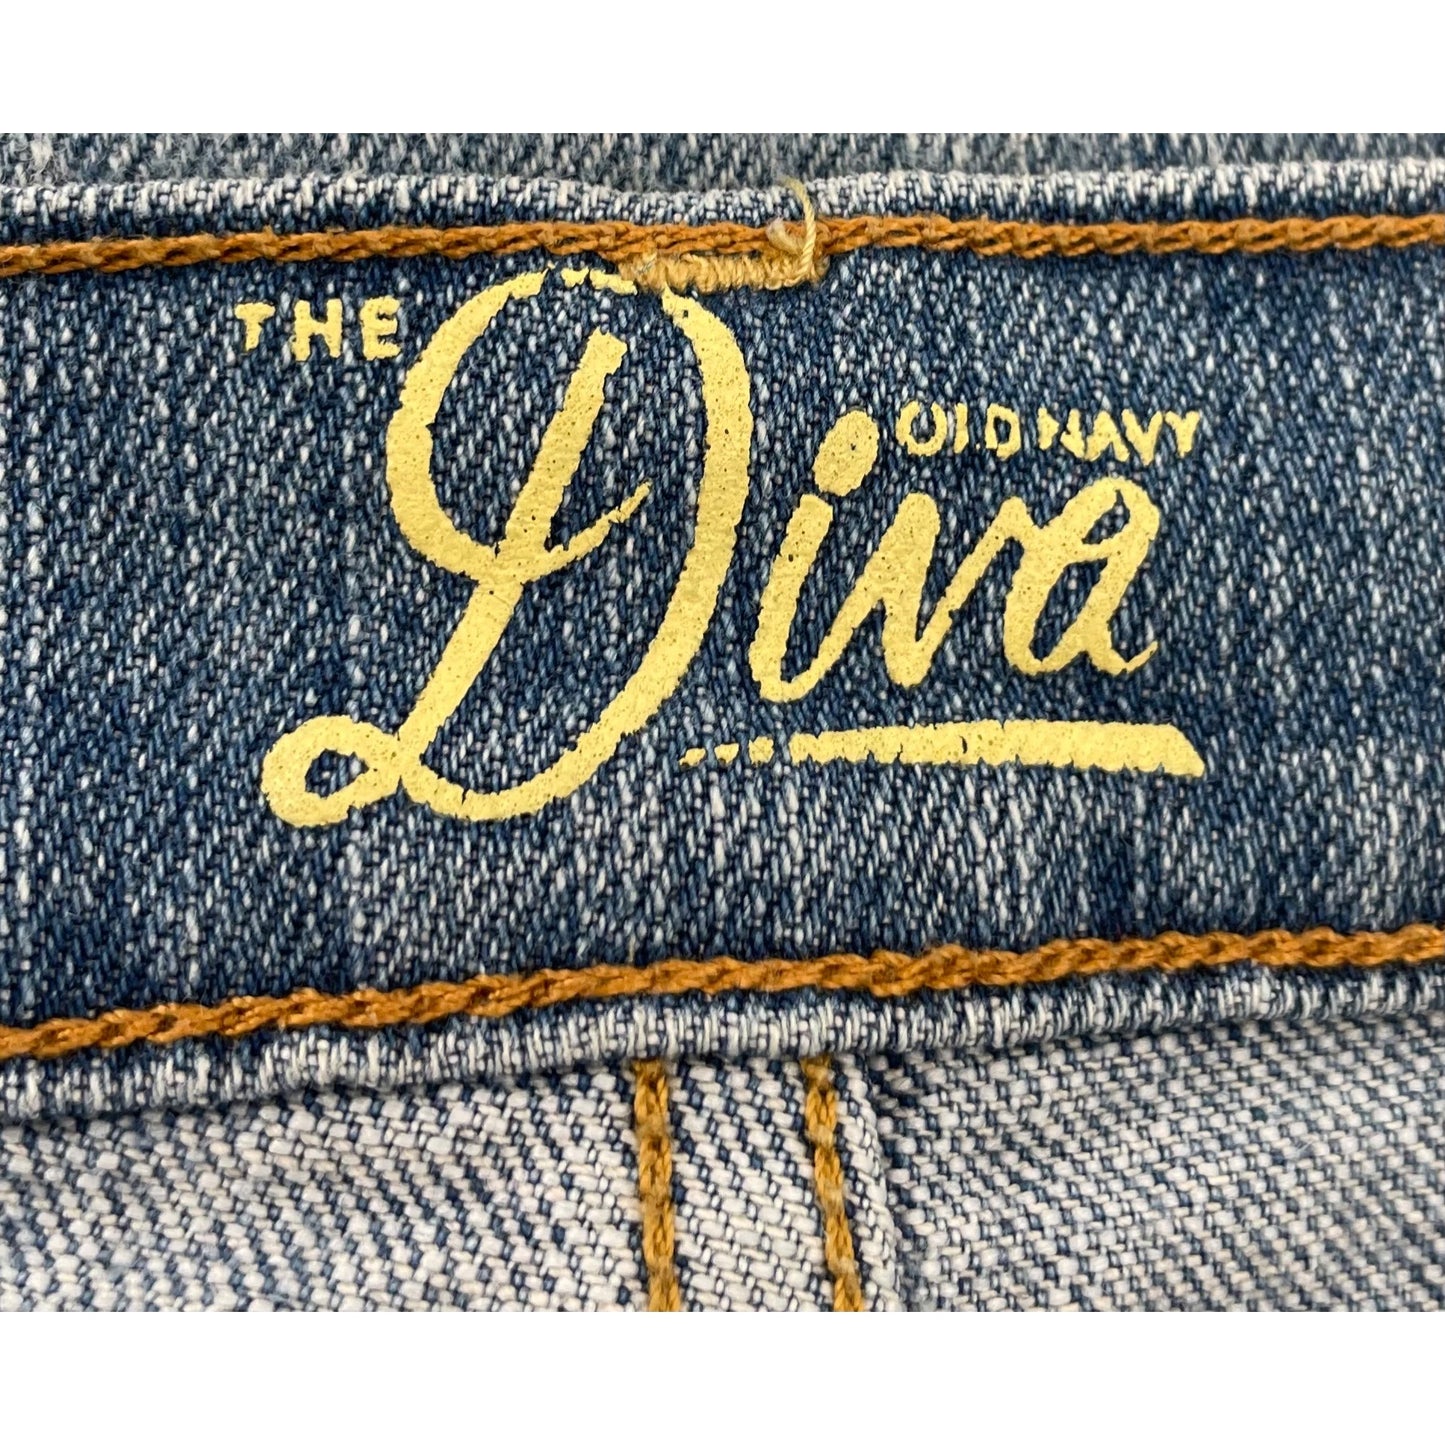 Old Navy The Diva Women's Size 2 Denim Blue Jean Shorts